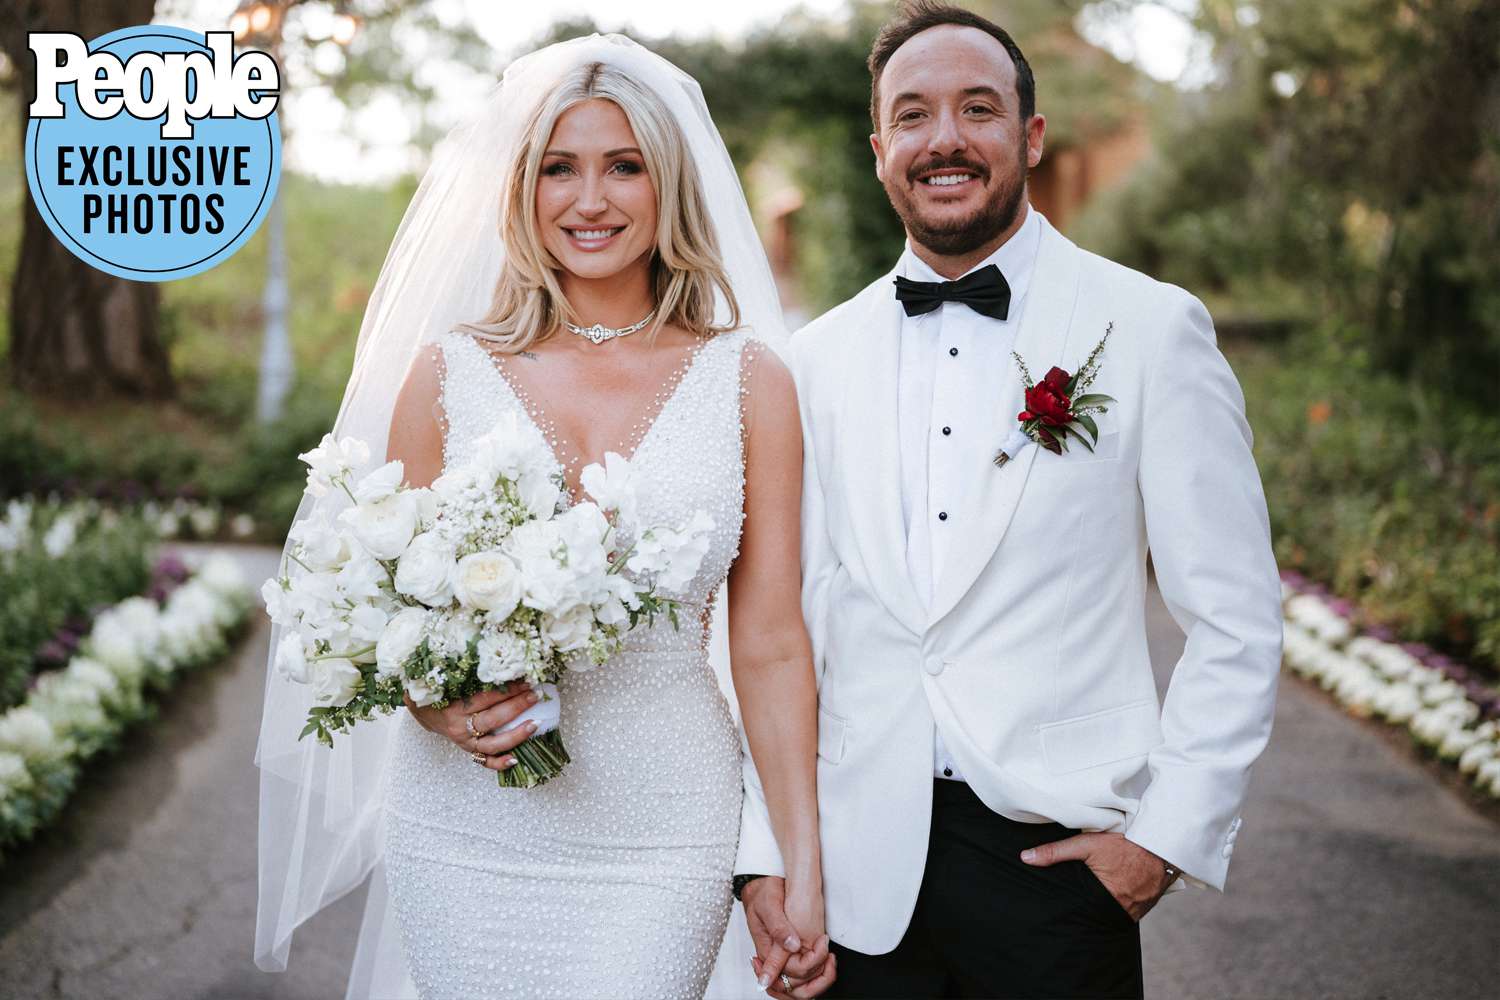 Taylor Hasselhoff's wedding https://drive.google.com/drive/folders/1gAm0O4q6CKWqMBh-wFyusUumoAggZzyU